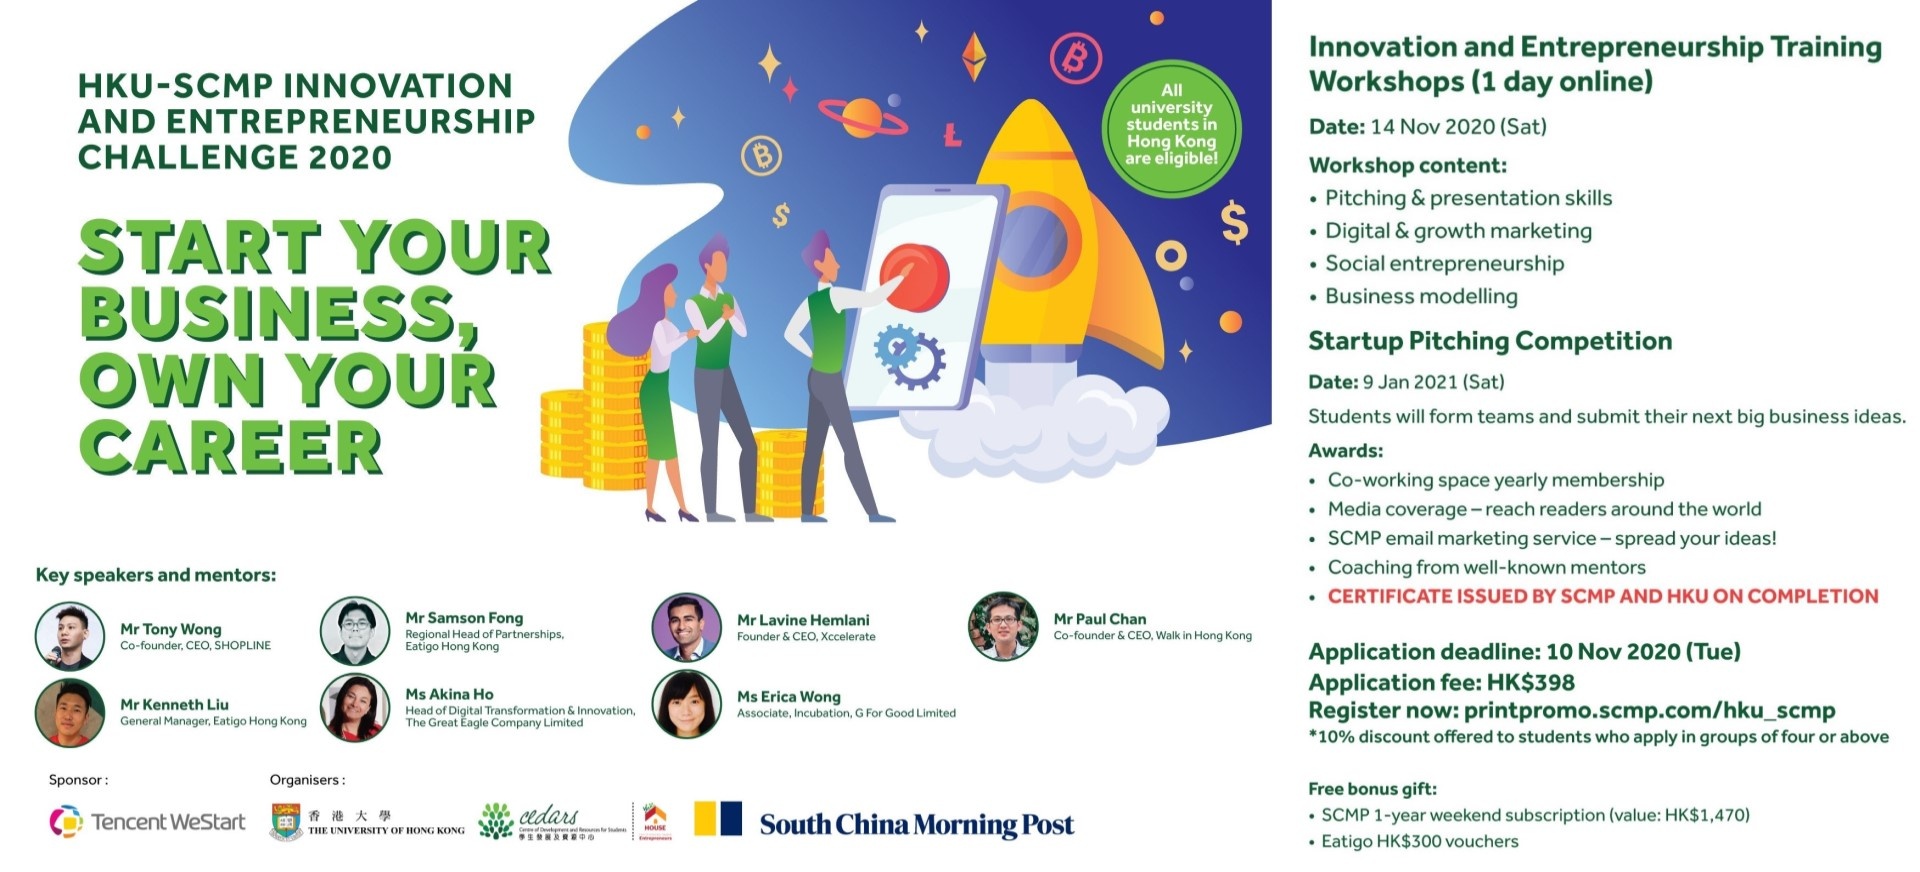 HKU-SCMP Innovation and Entrepreneurship Challenge 2020